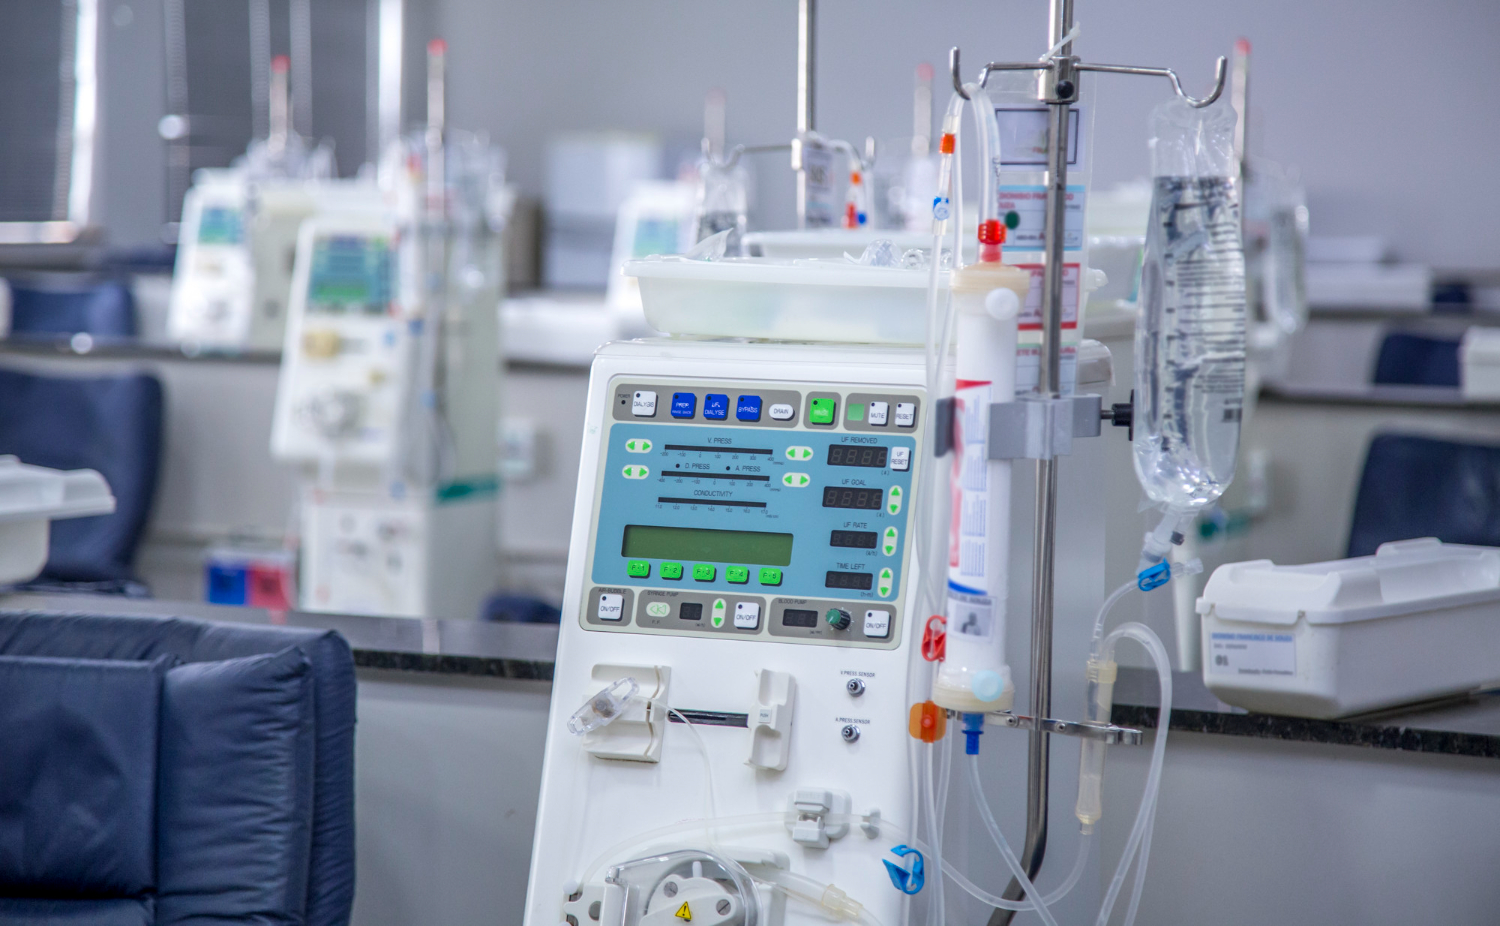 hemodialysis-room-equipment